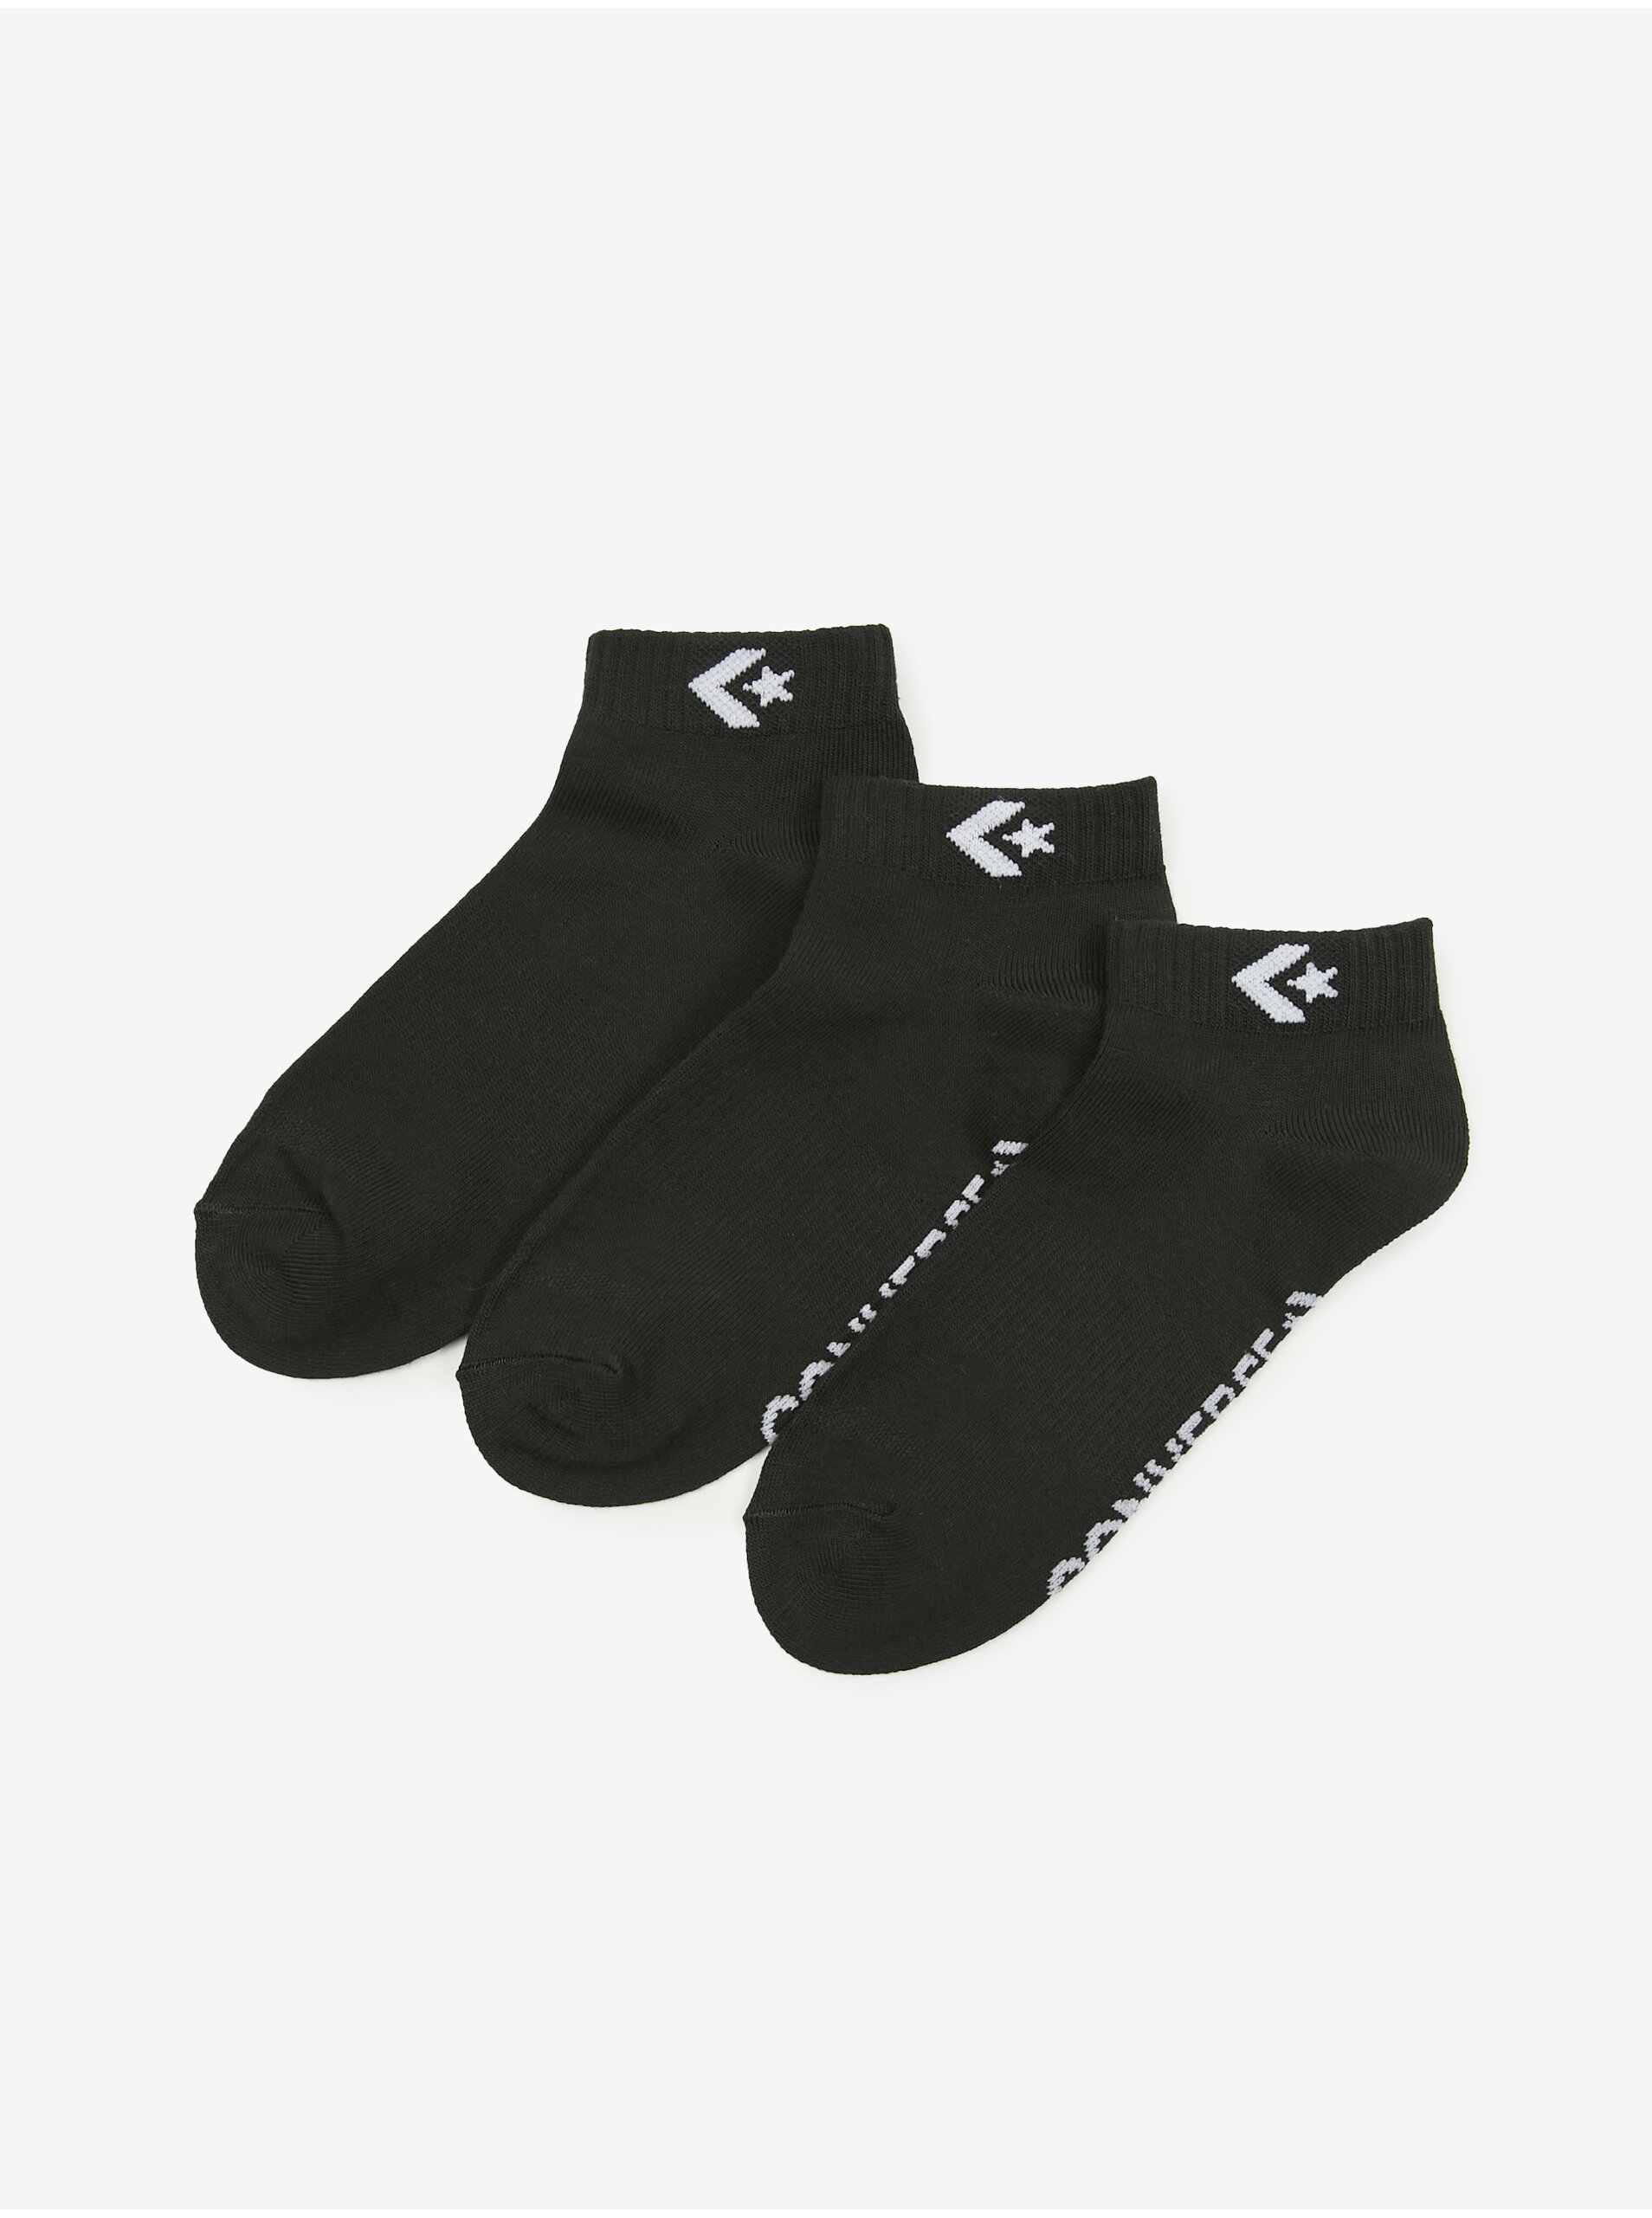 Set of three pairs of women's socks in Converse black - Women's